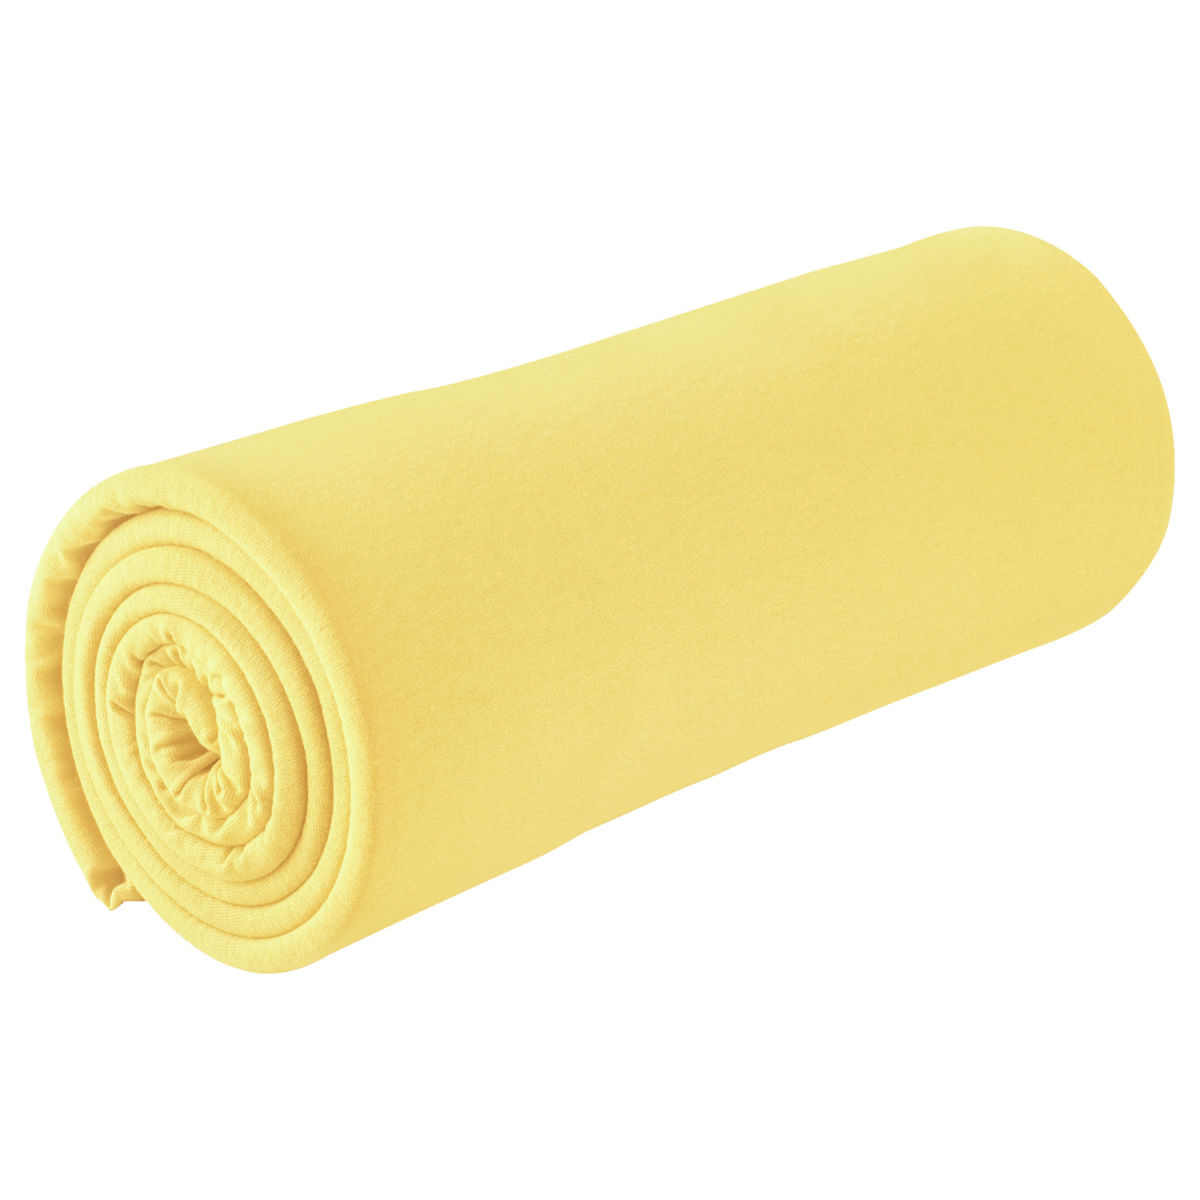 Sábana bajera ajustable Jersey ERWIN M.; 90-100x190-200 cm (AnxLg); amarillo; 2 pz. / Paquete